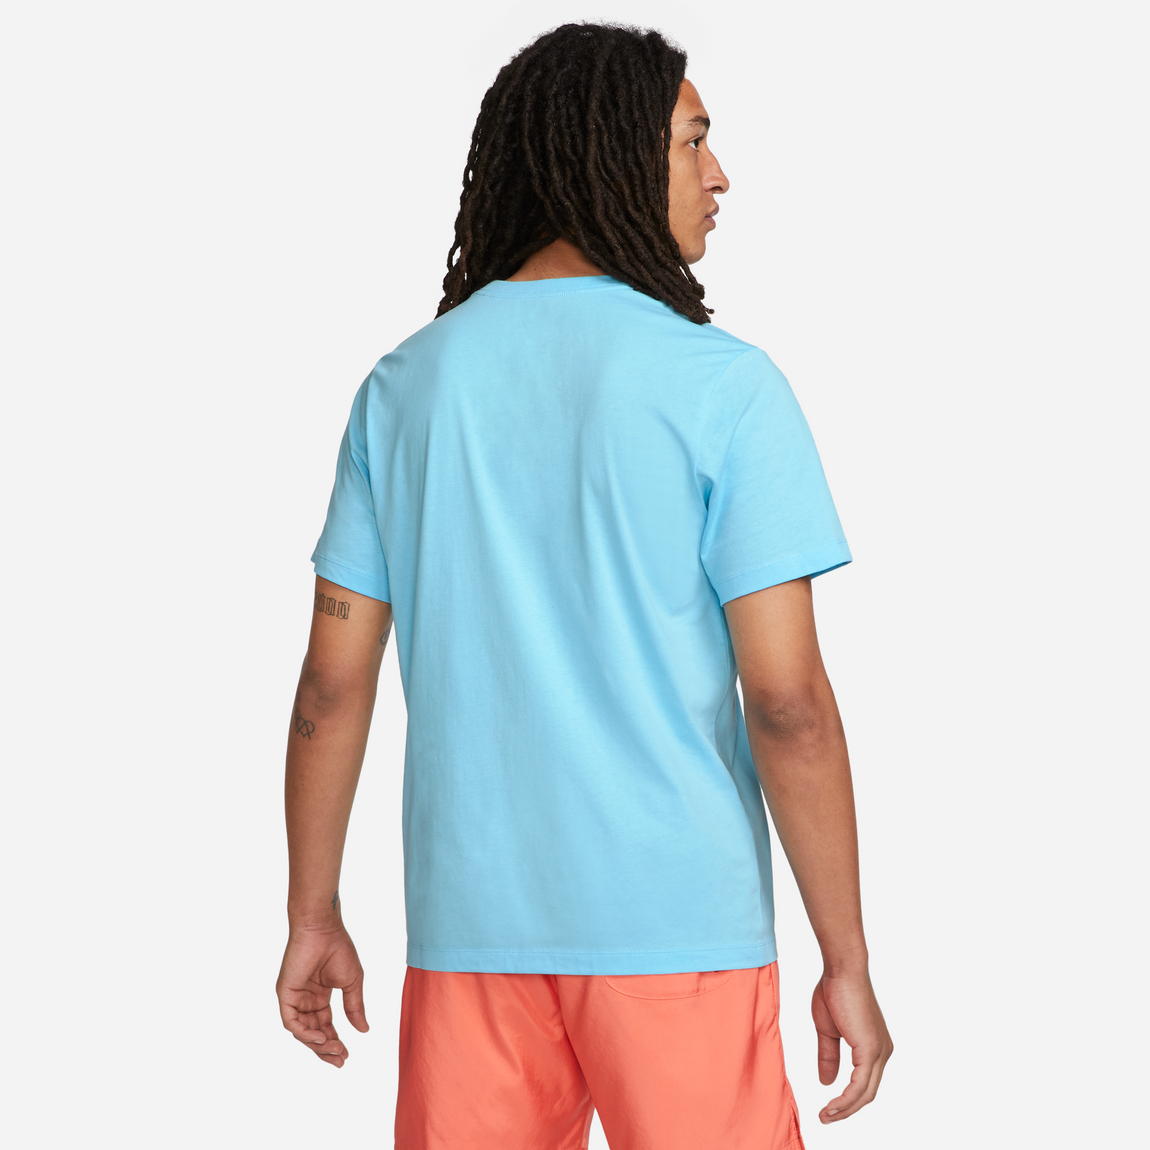 Nike Club t-shirt in pale blue